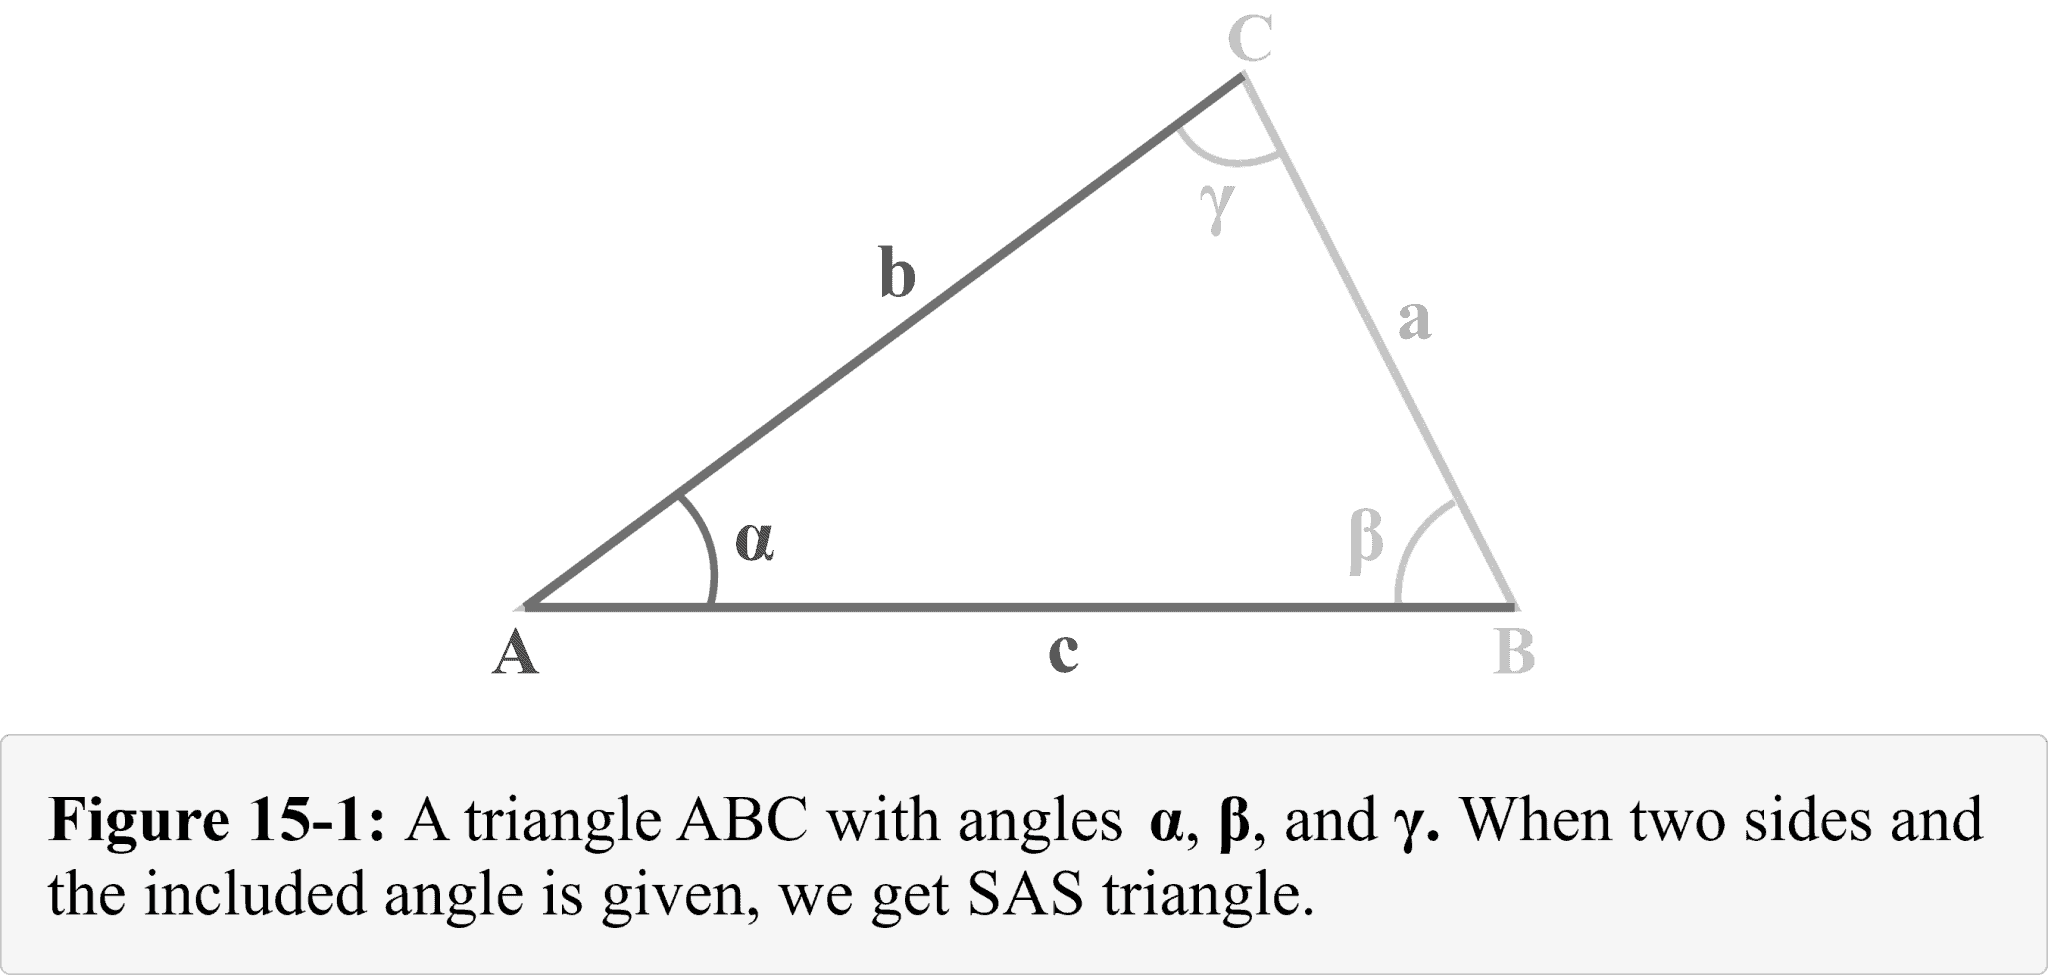 How To Solve A Sas Triangle